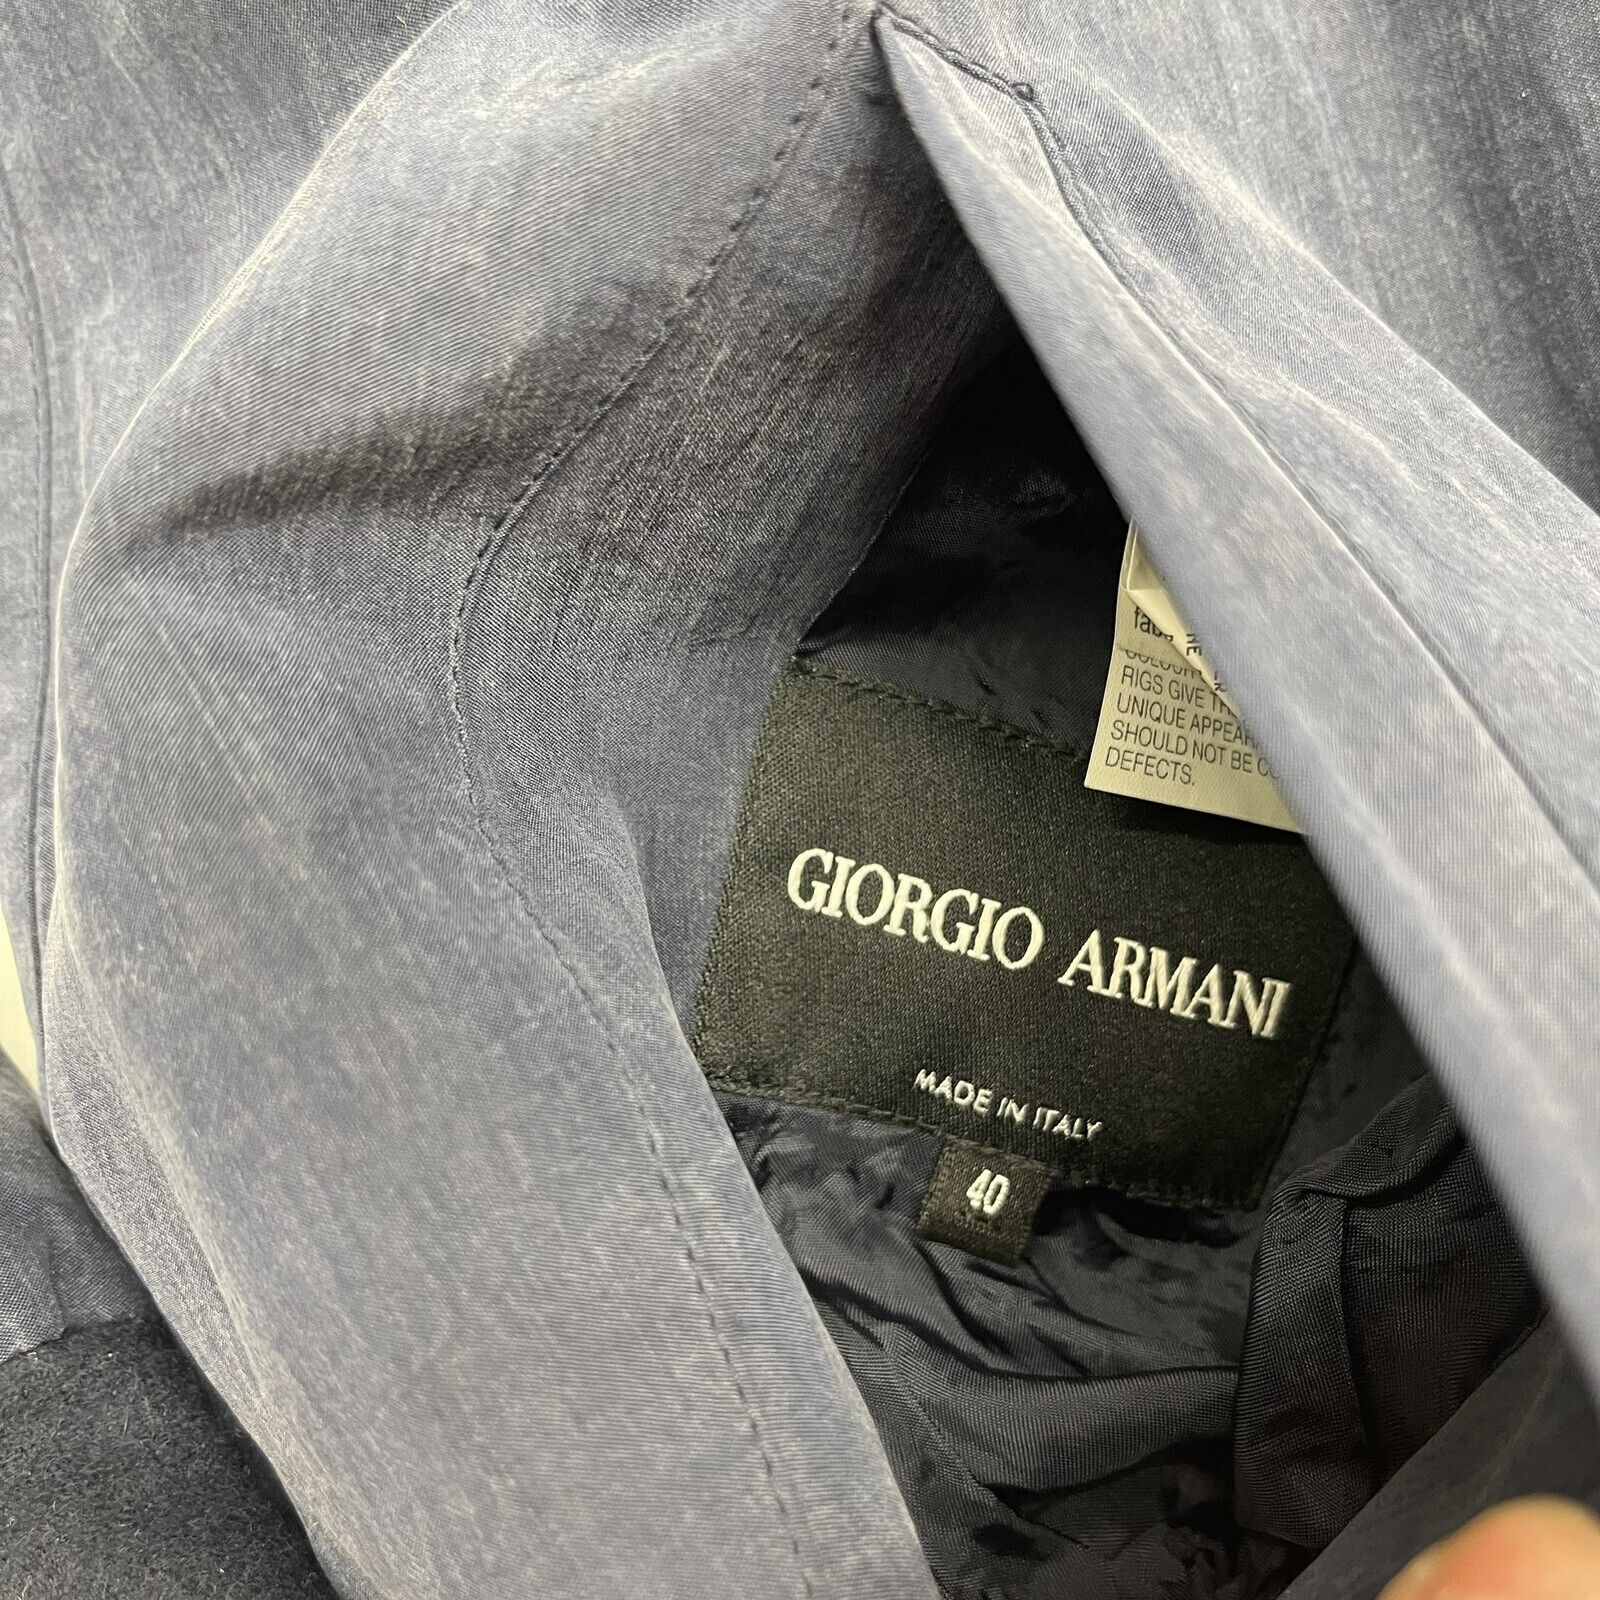 Emporio Armani Men's Reversible Full Zip Jacket - Blue - Size 52 - Solid Medium